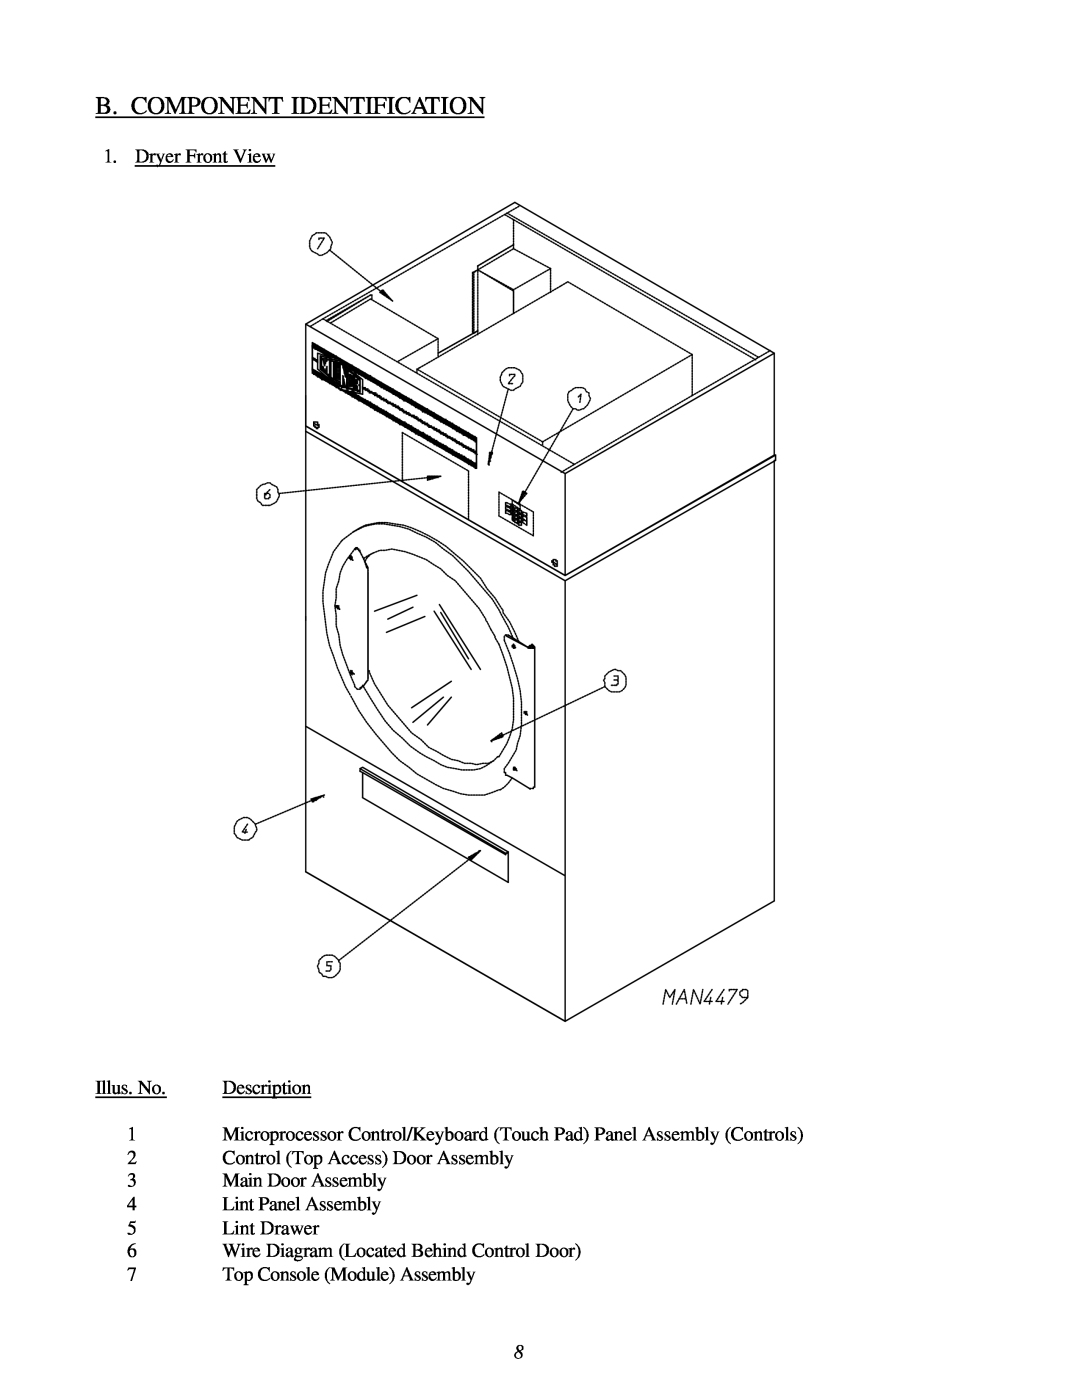 American Dryer Corp ML-122D installation manual B. Component Identification, Dryer Front View, Illus. No, Description 